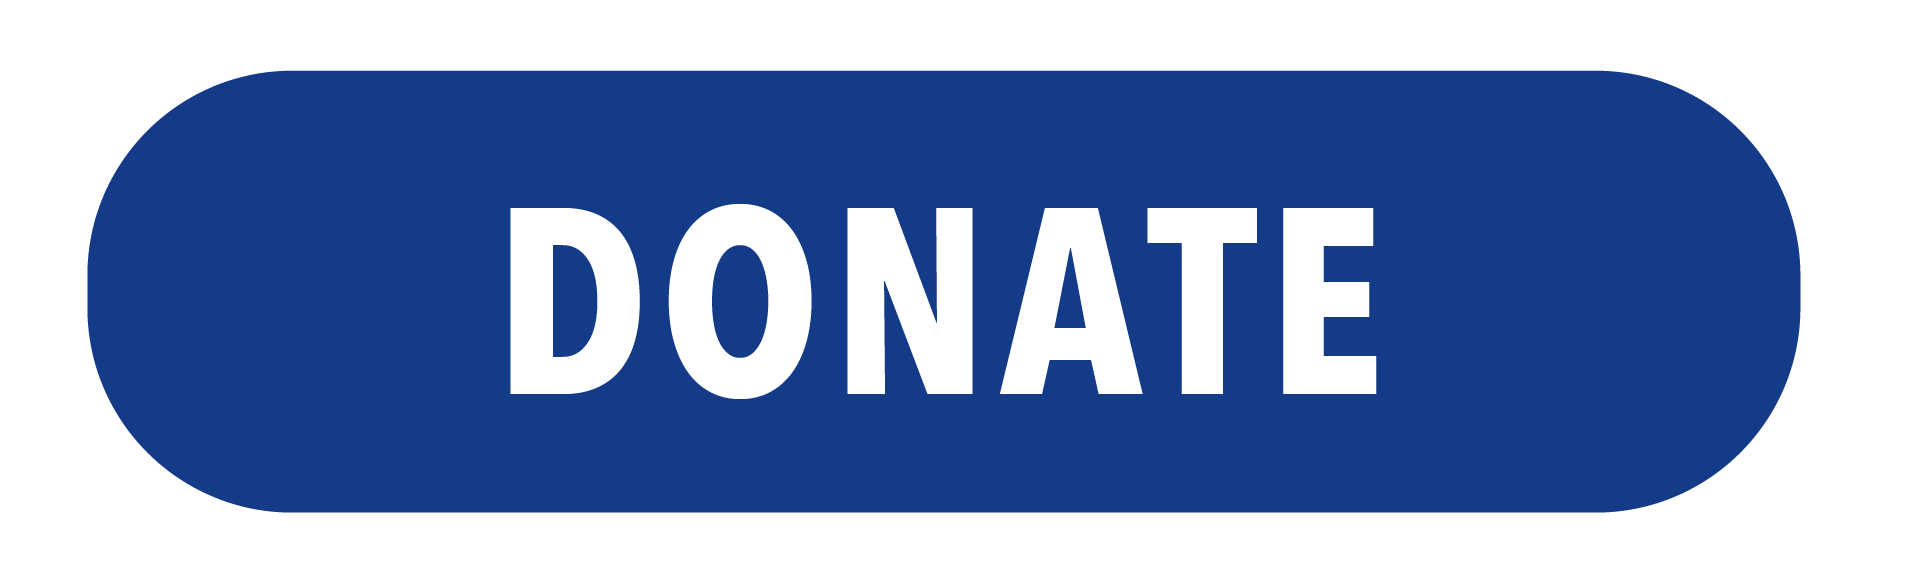 Donate Button PNG Cutout